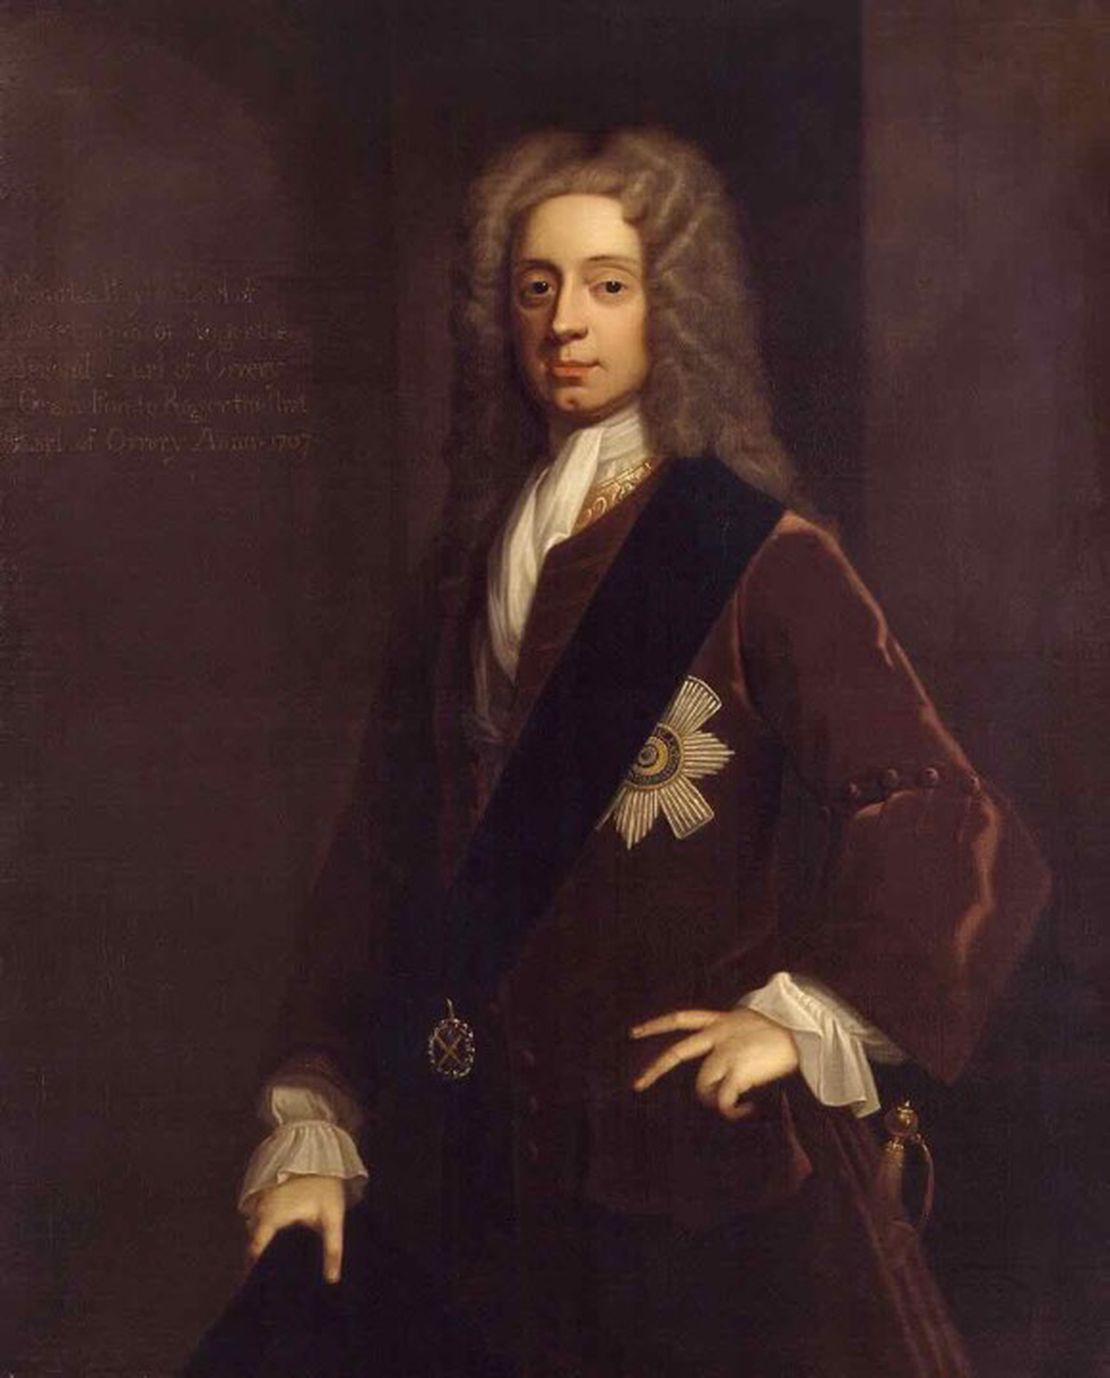 Charles Boyle, 4th Earl of Orrery, born